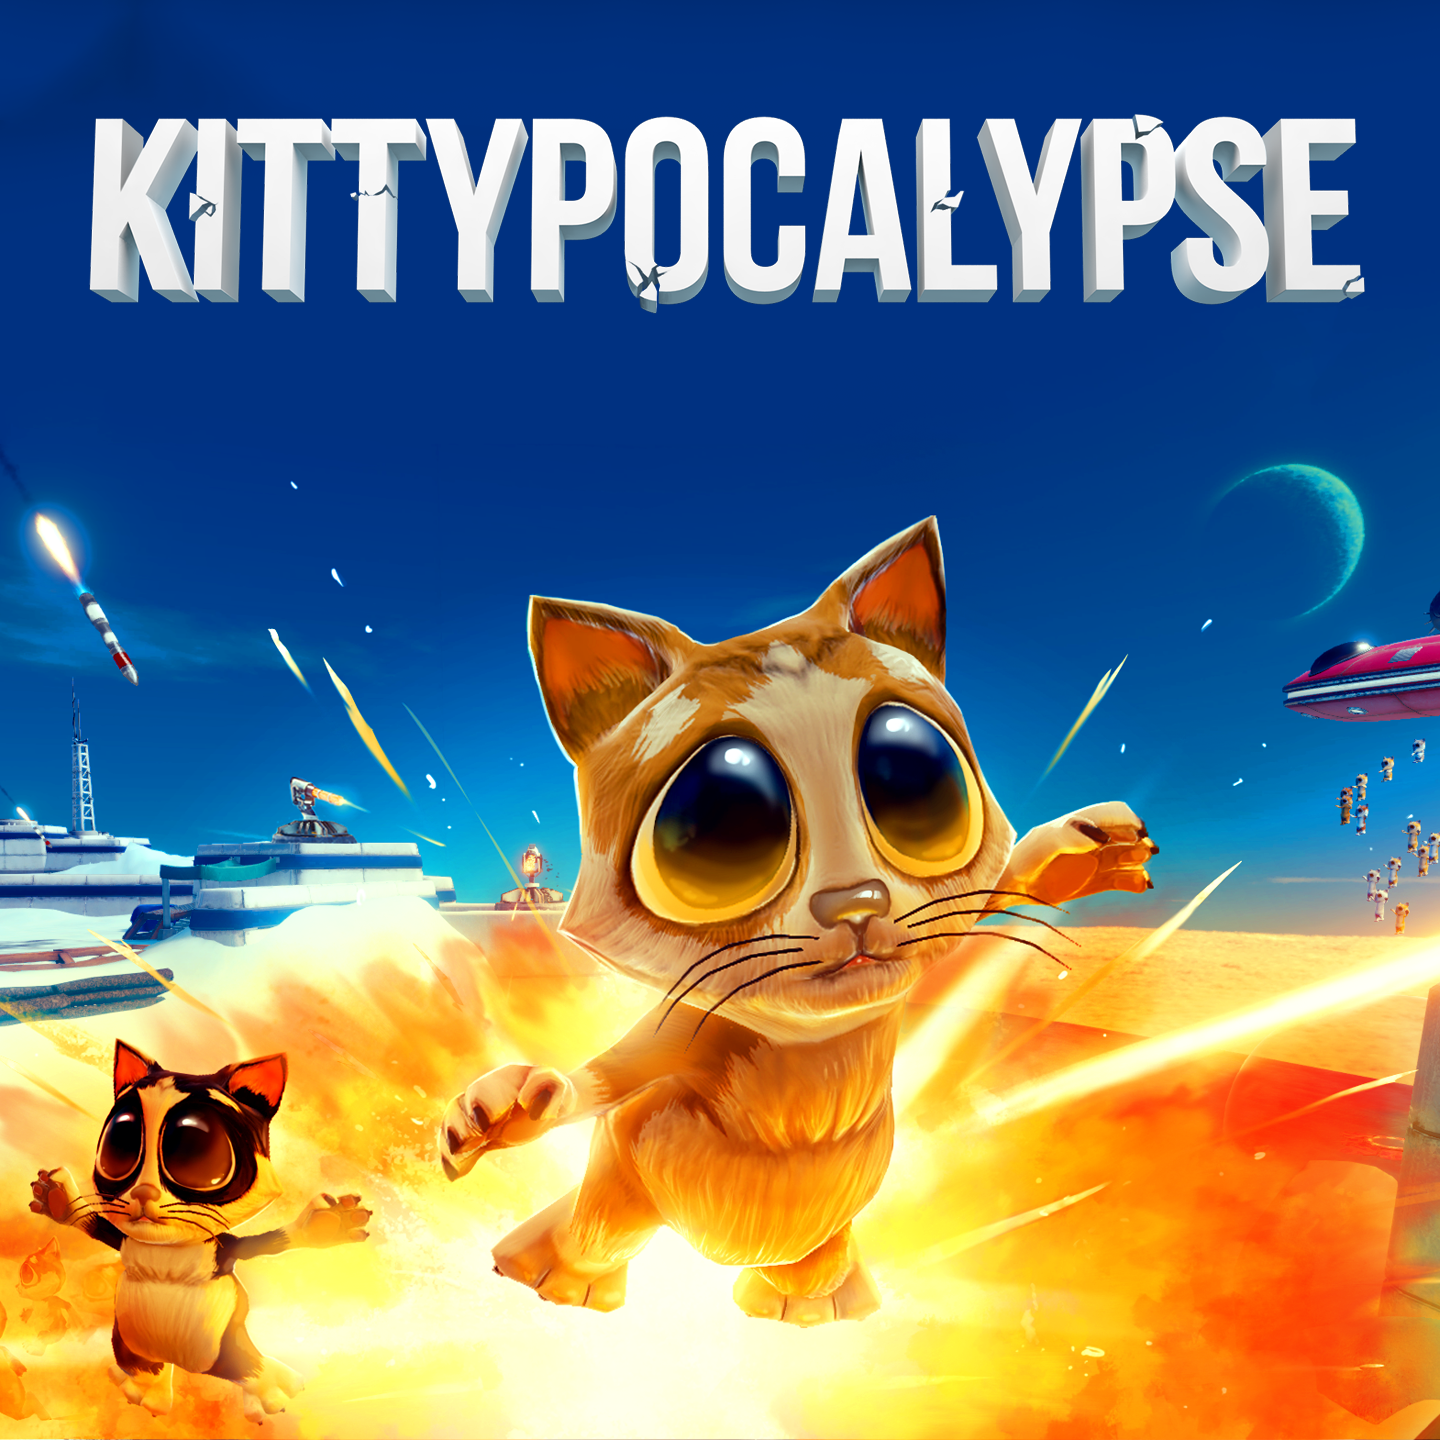 Kittypocalypse Picture